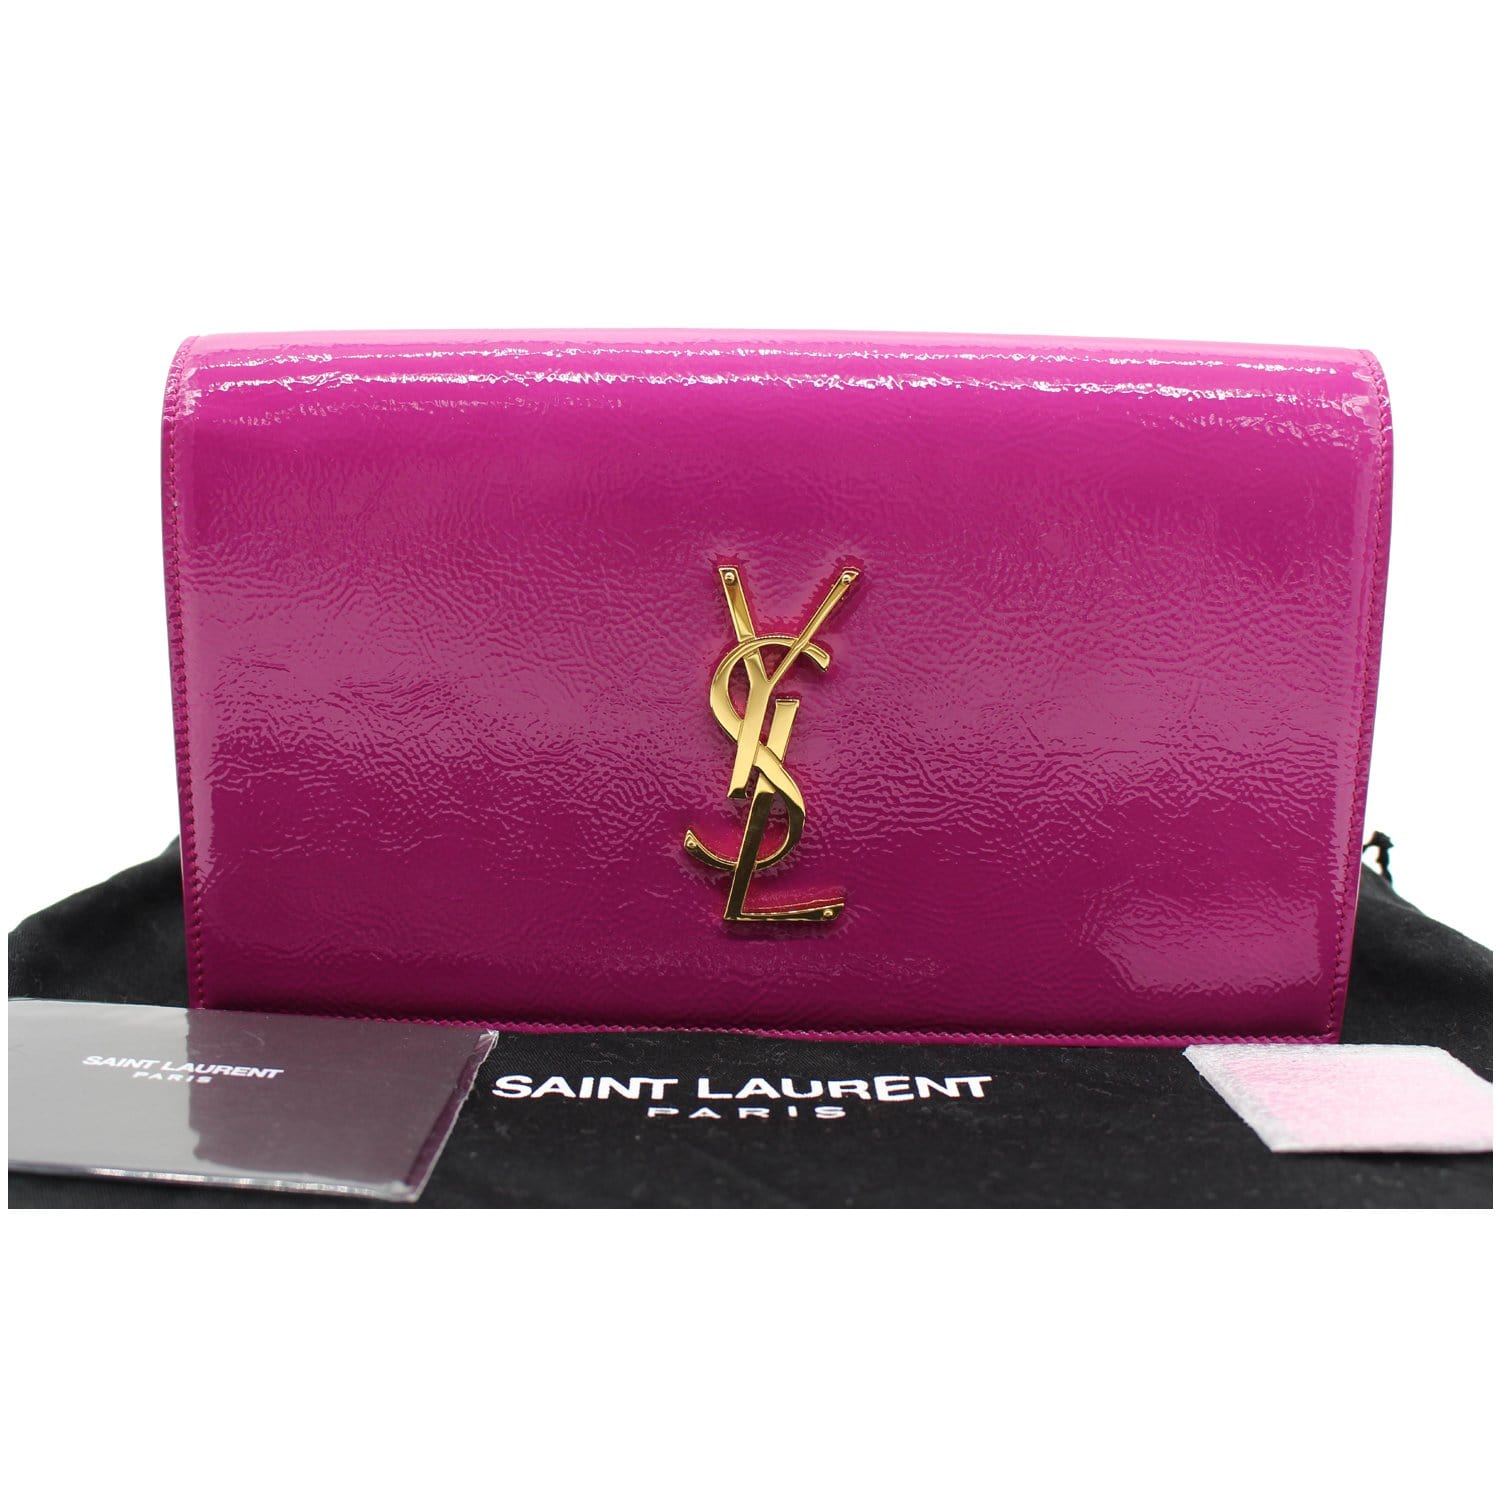 Belle de jour glitter clutch bag Yves Saint Laurent Pink in